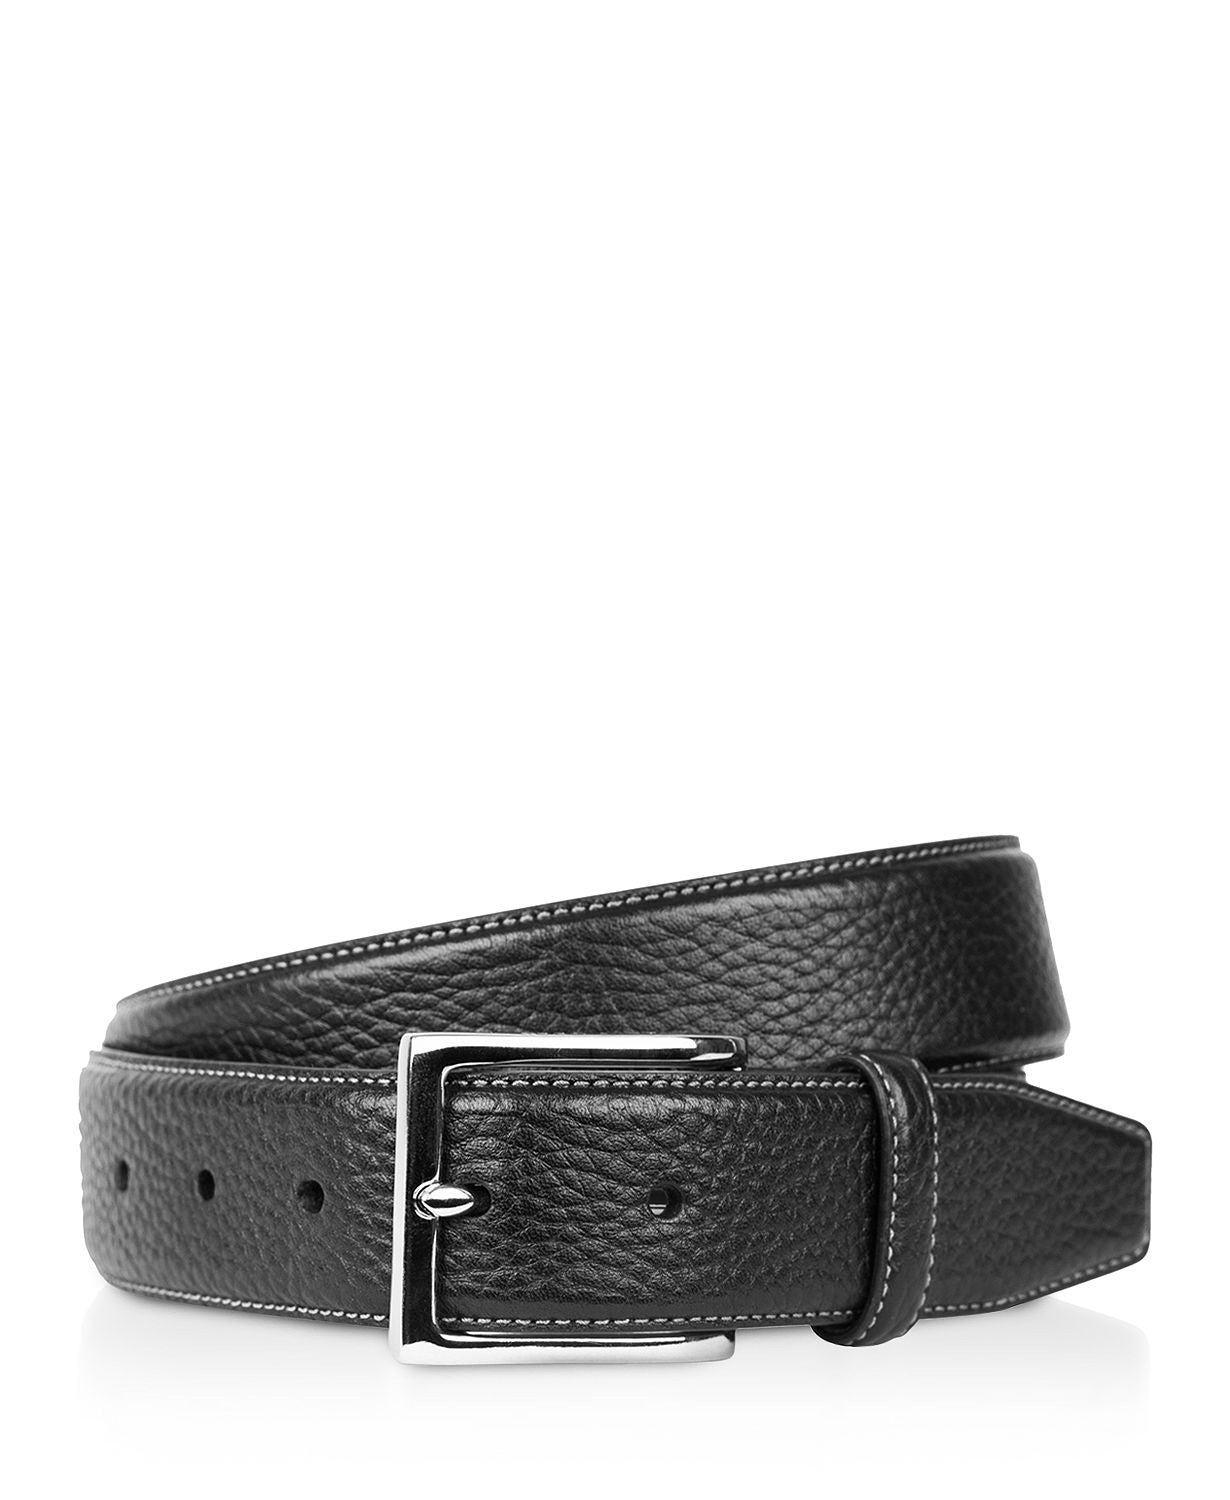 Cole Haan Pebble Leather Belt Black